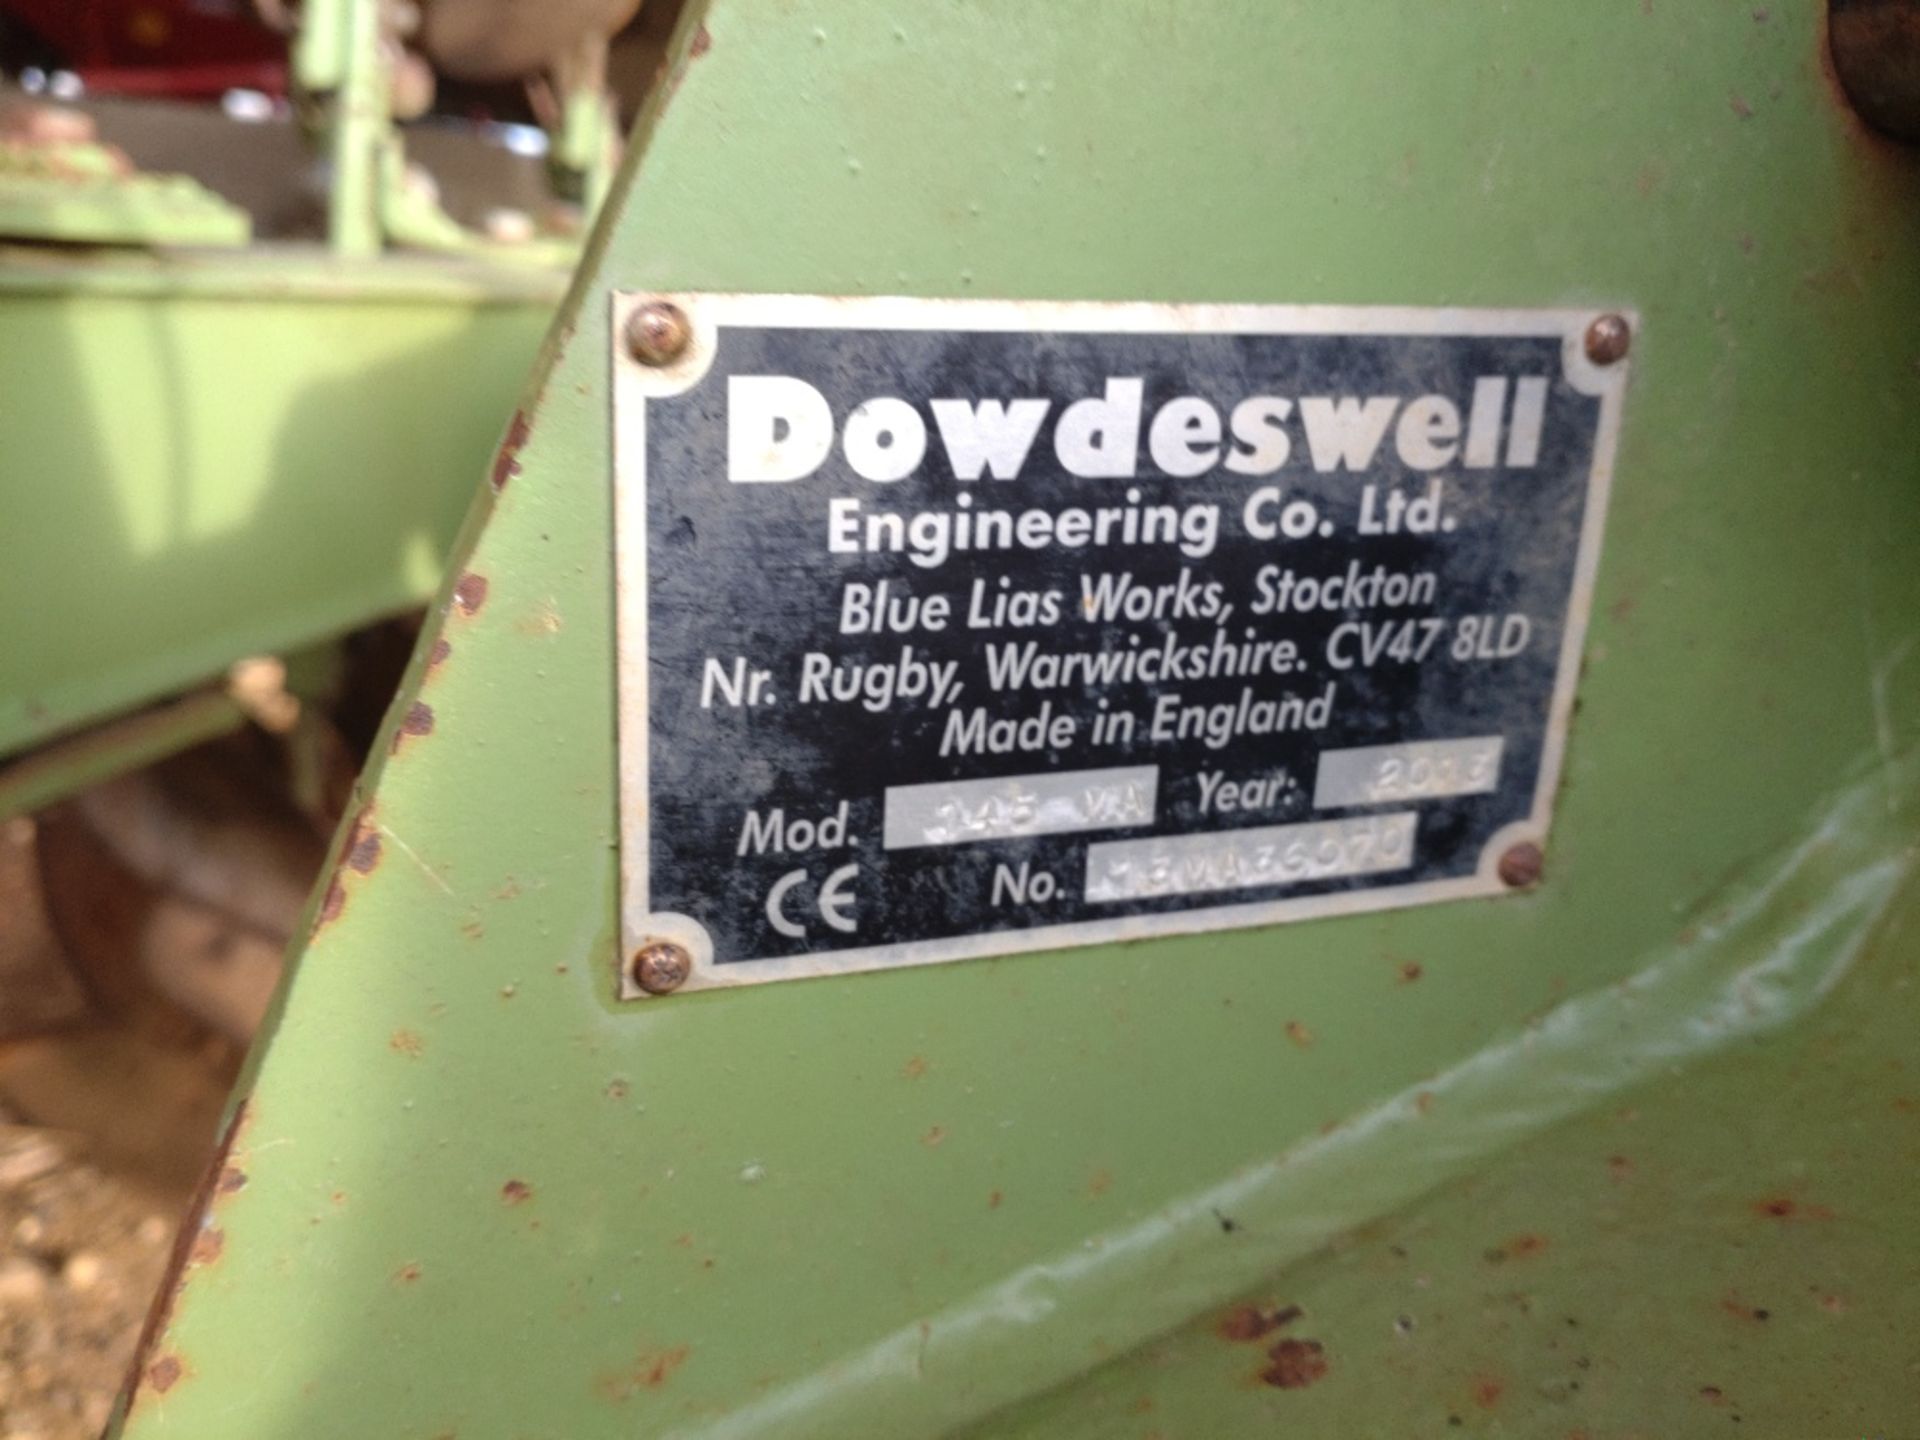 2013 Dowdeswell 145 Series MA 6 furrow reversible plough s/n 13MA36070 - Image 5 of 5